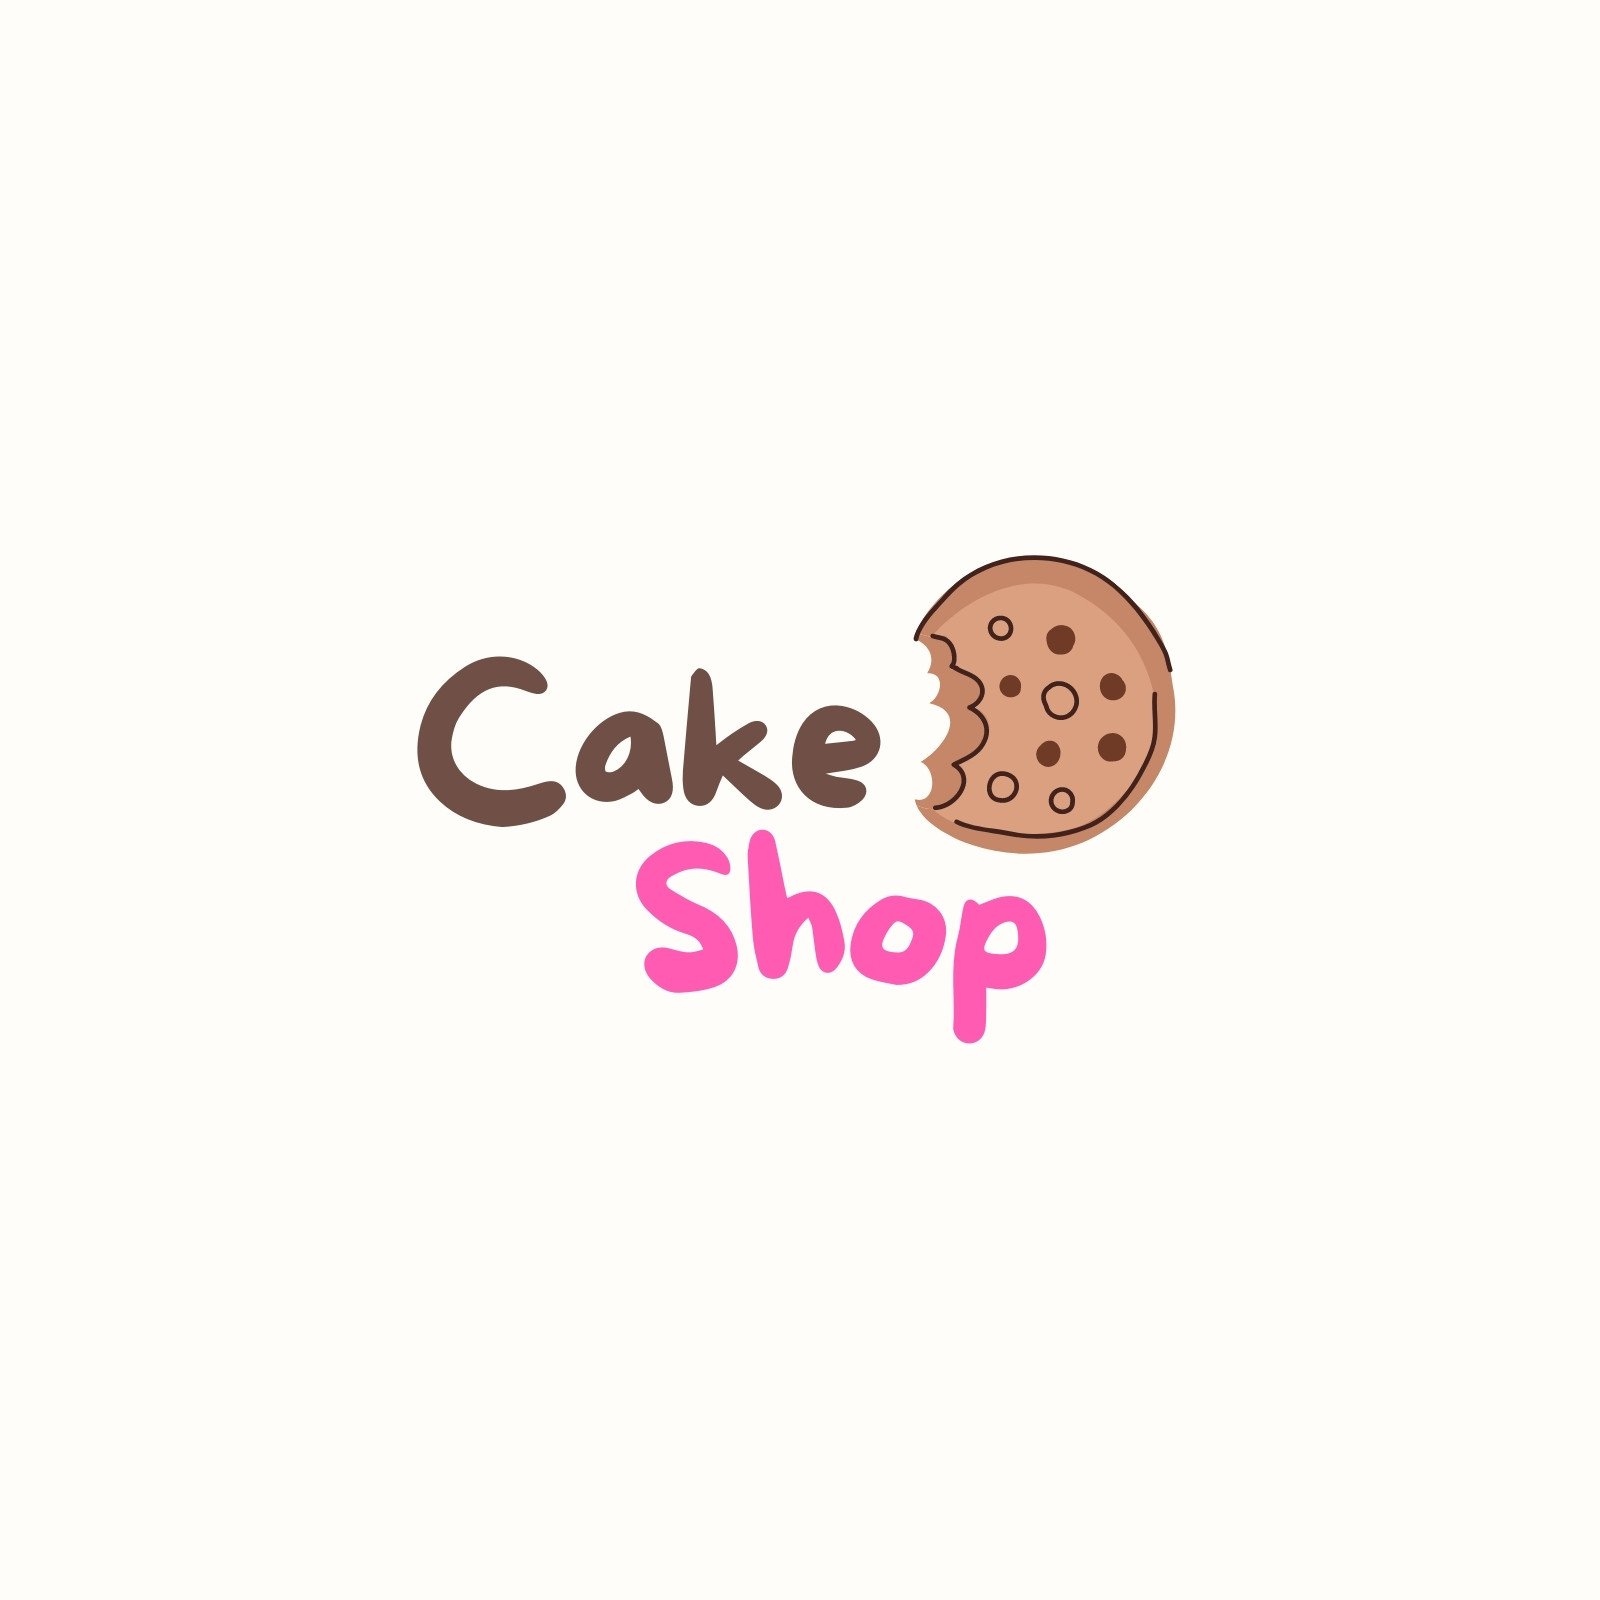 KITKAT CAKE by best online cake shop in kochi | by Mohamed Naseeb | Medium